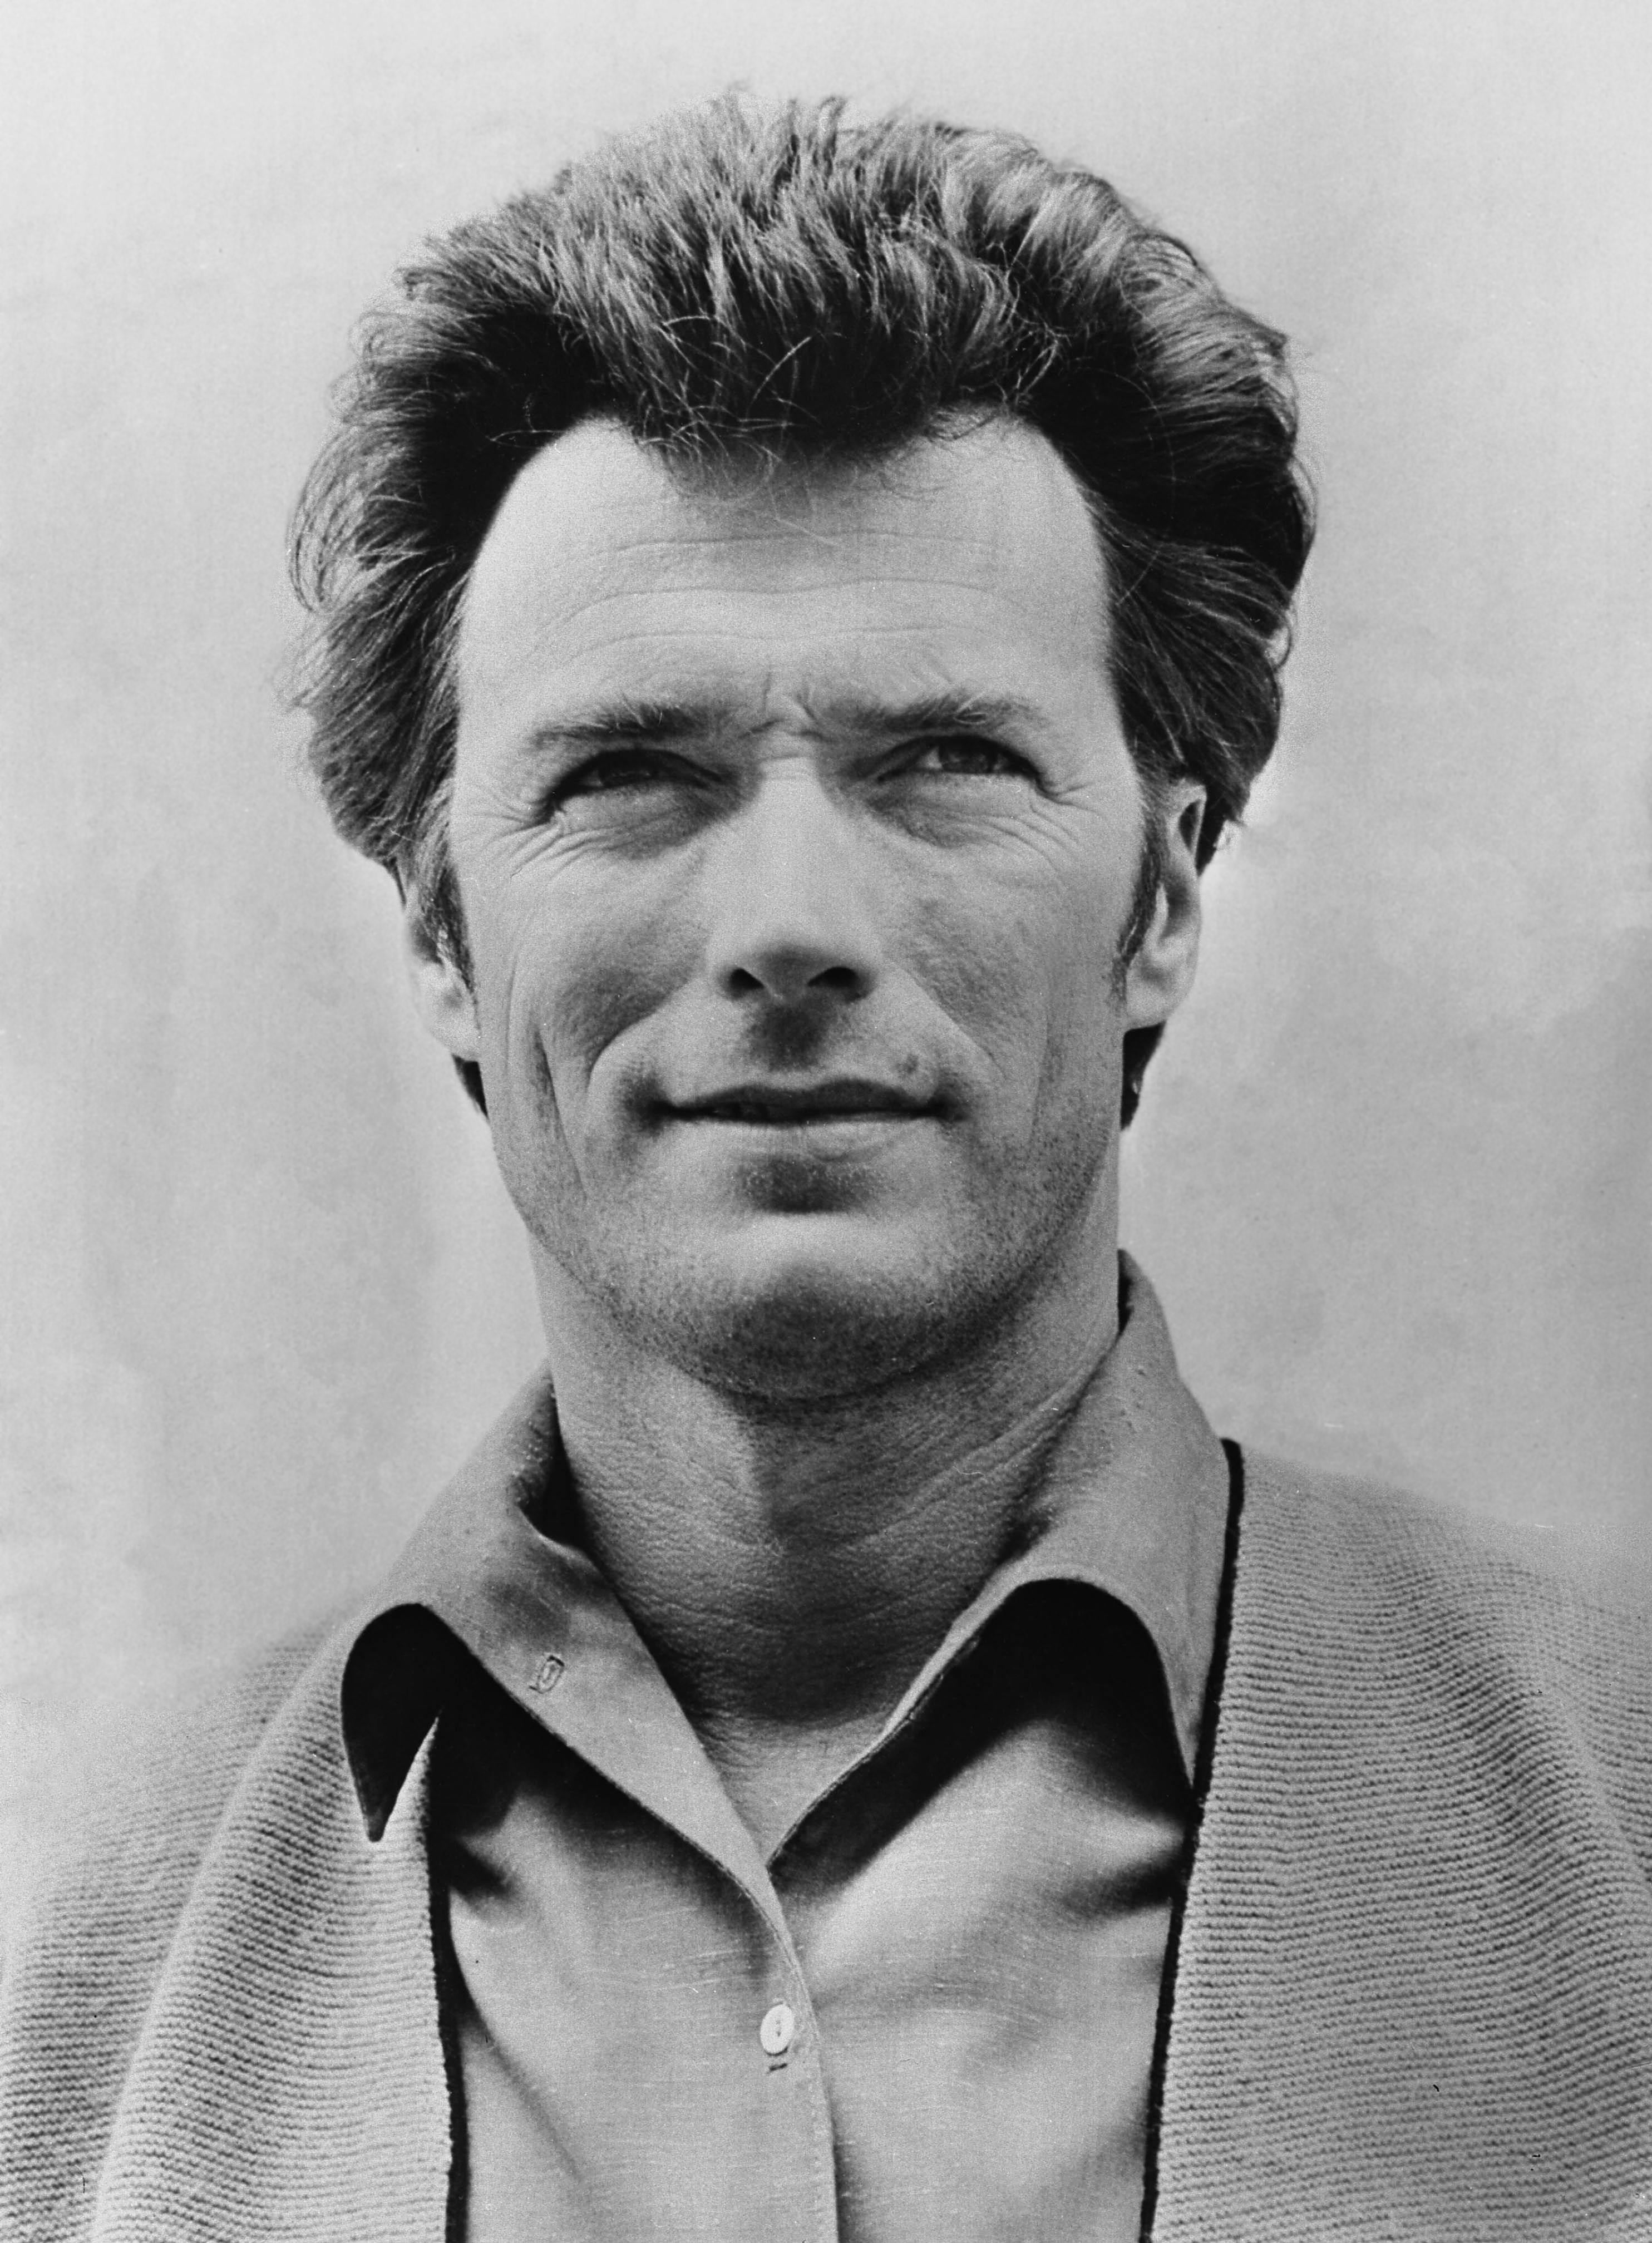 Unknown Portrait Photograph - Clint Eastwood: Handsome Star Actor Globe Photos Fine Art Print